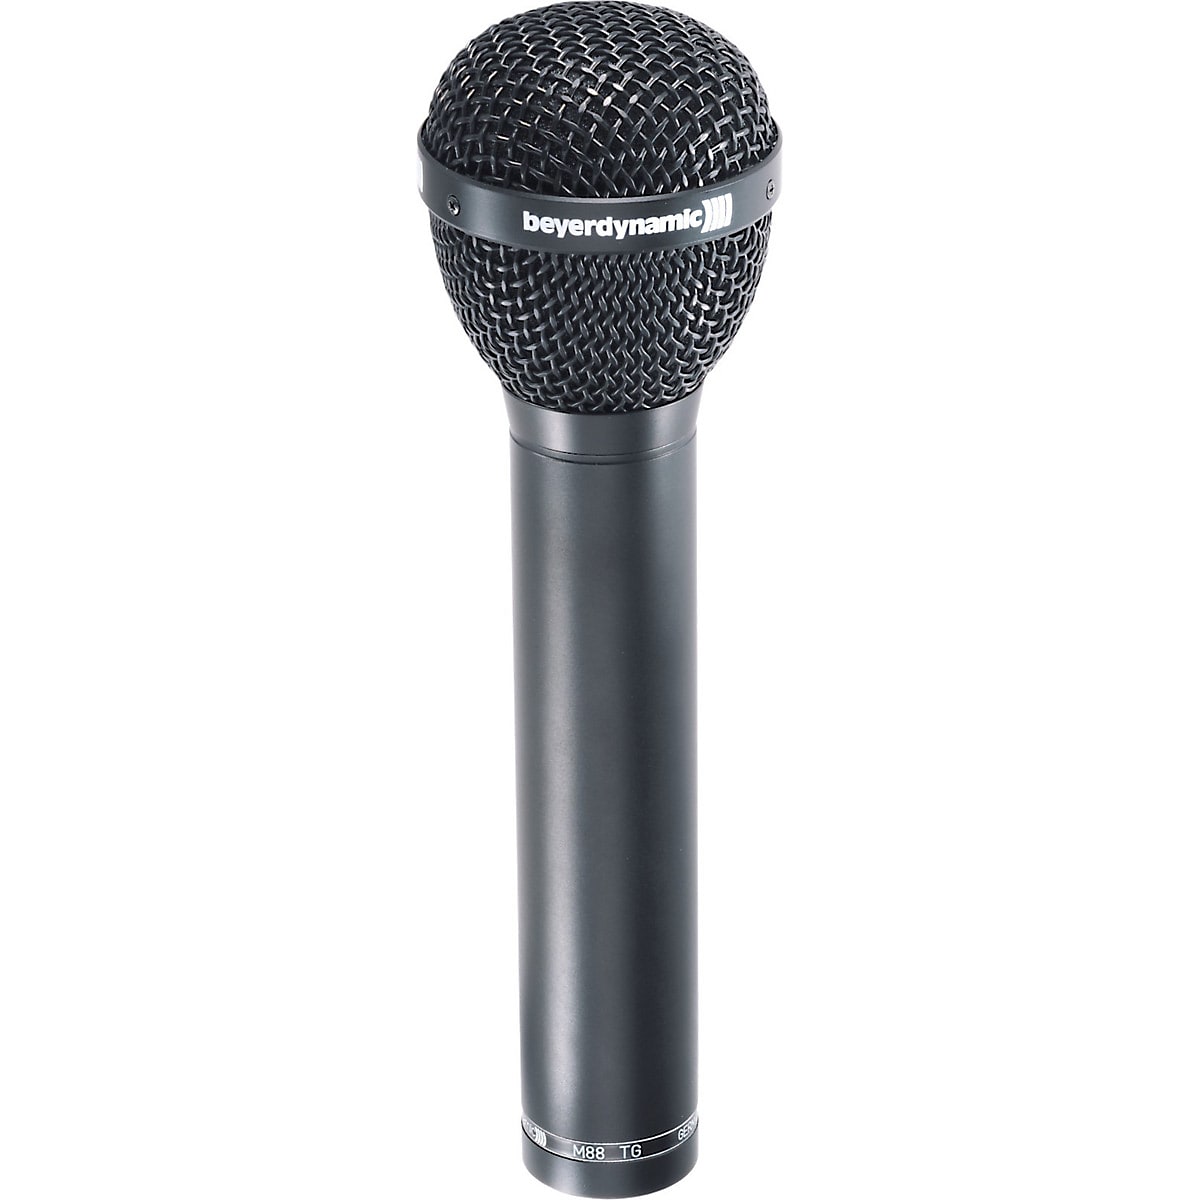 Beyerdynamic M 88 TG Hypercardioid Dynamic Microphone | Reverb